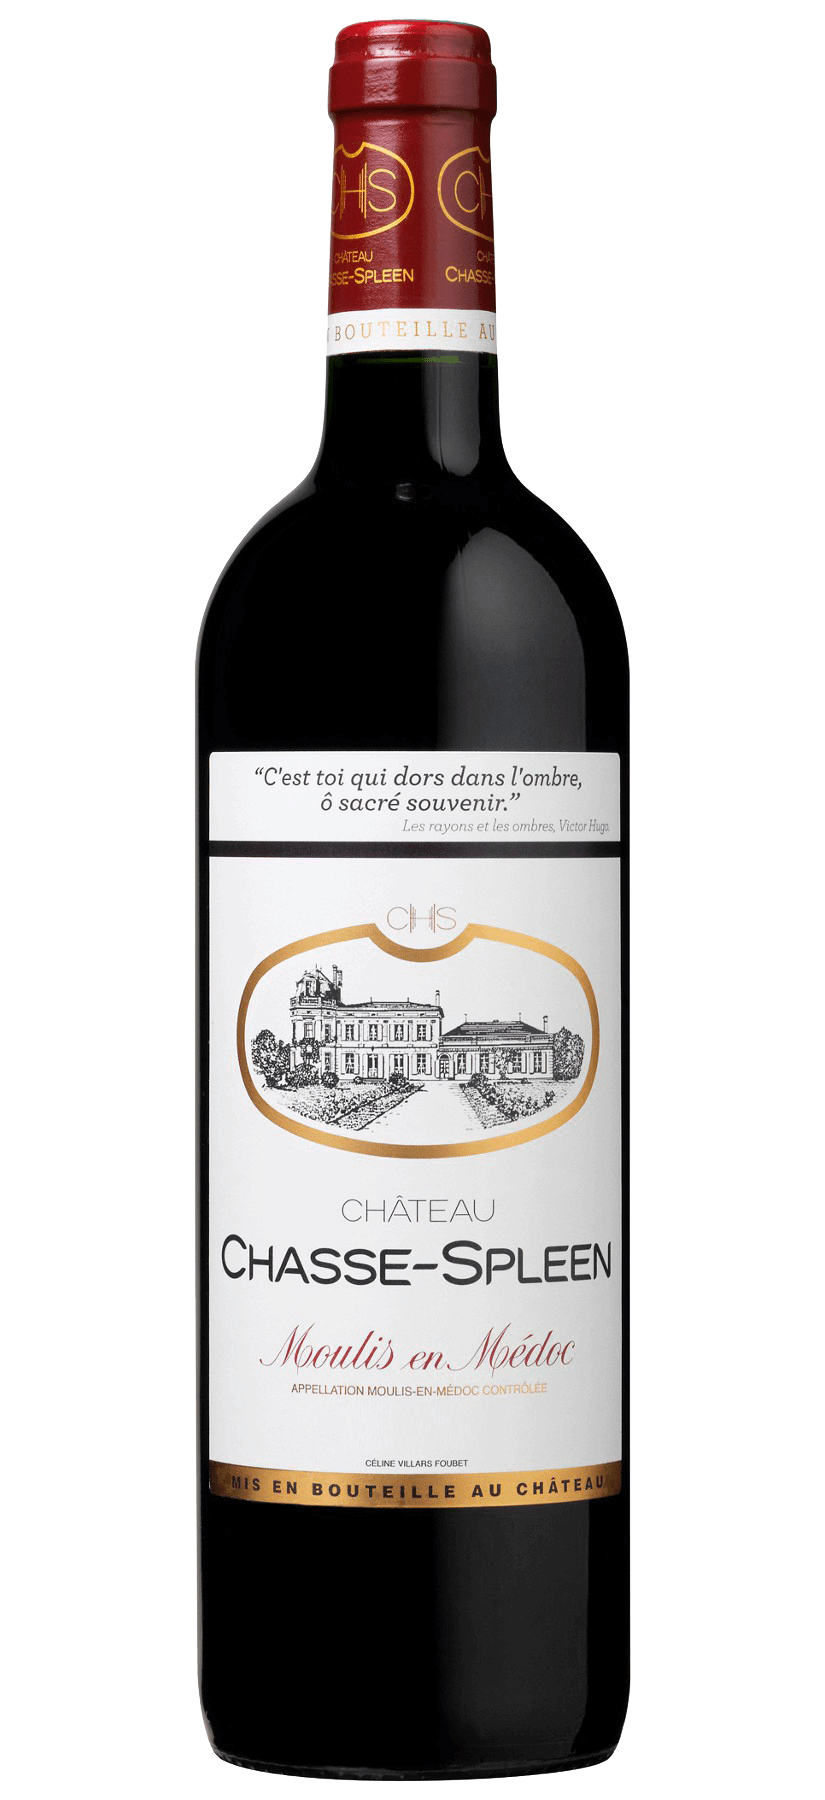 Chateau Chasse-Spleen 2016 (RP:92-94)